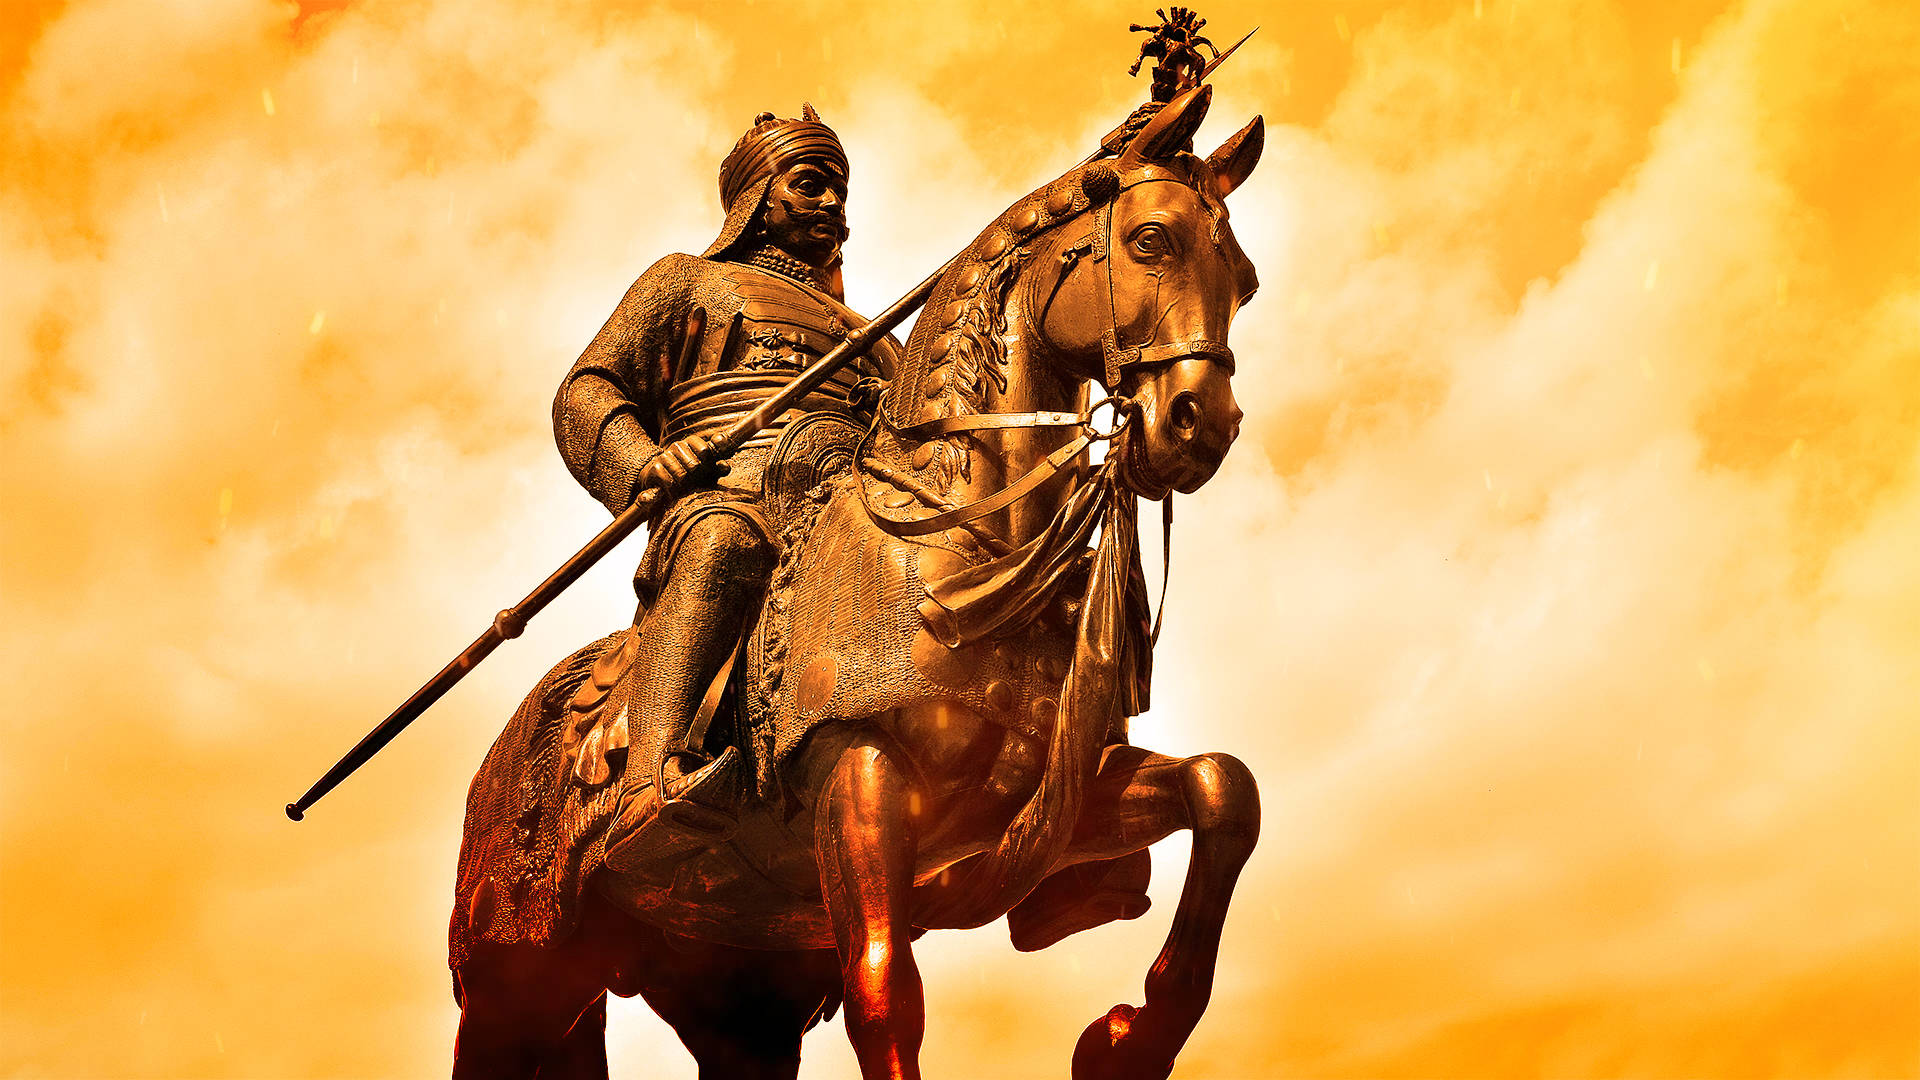 Majestic Rajputana Warrior on Horseback Wallpaper